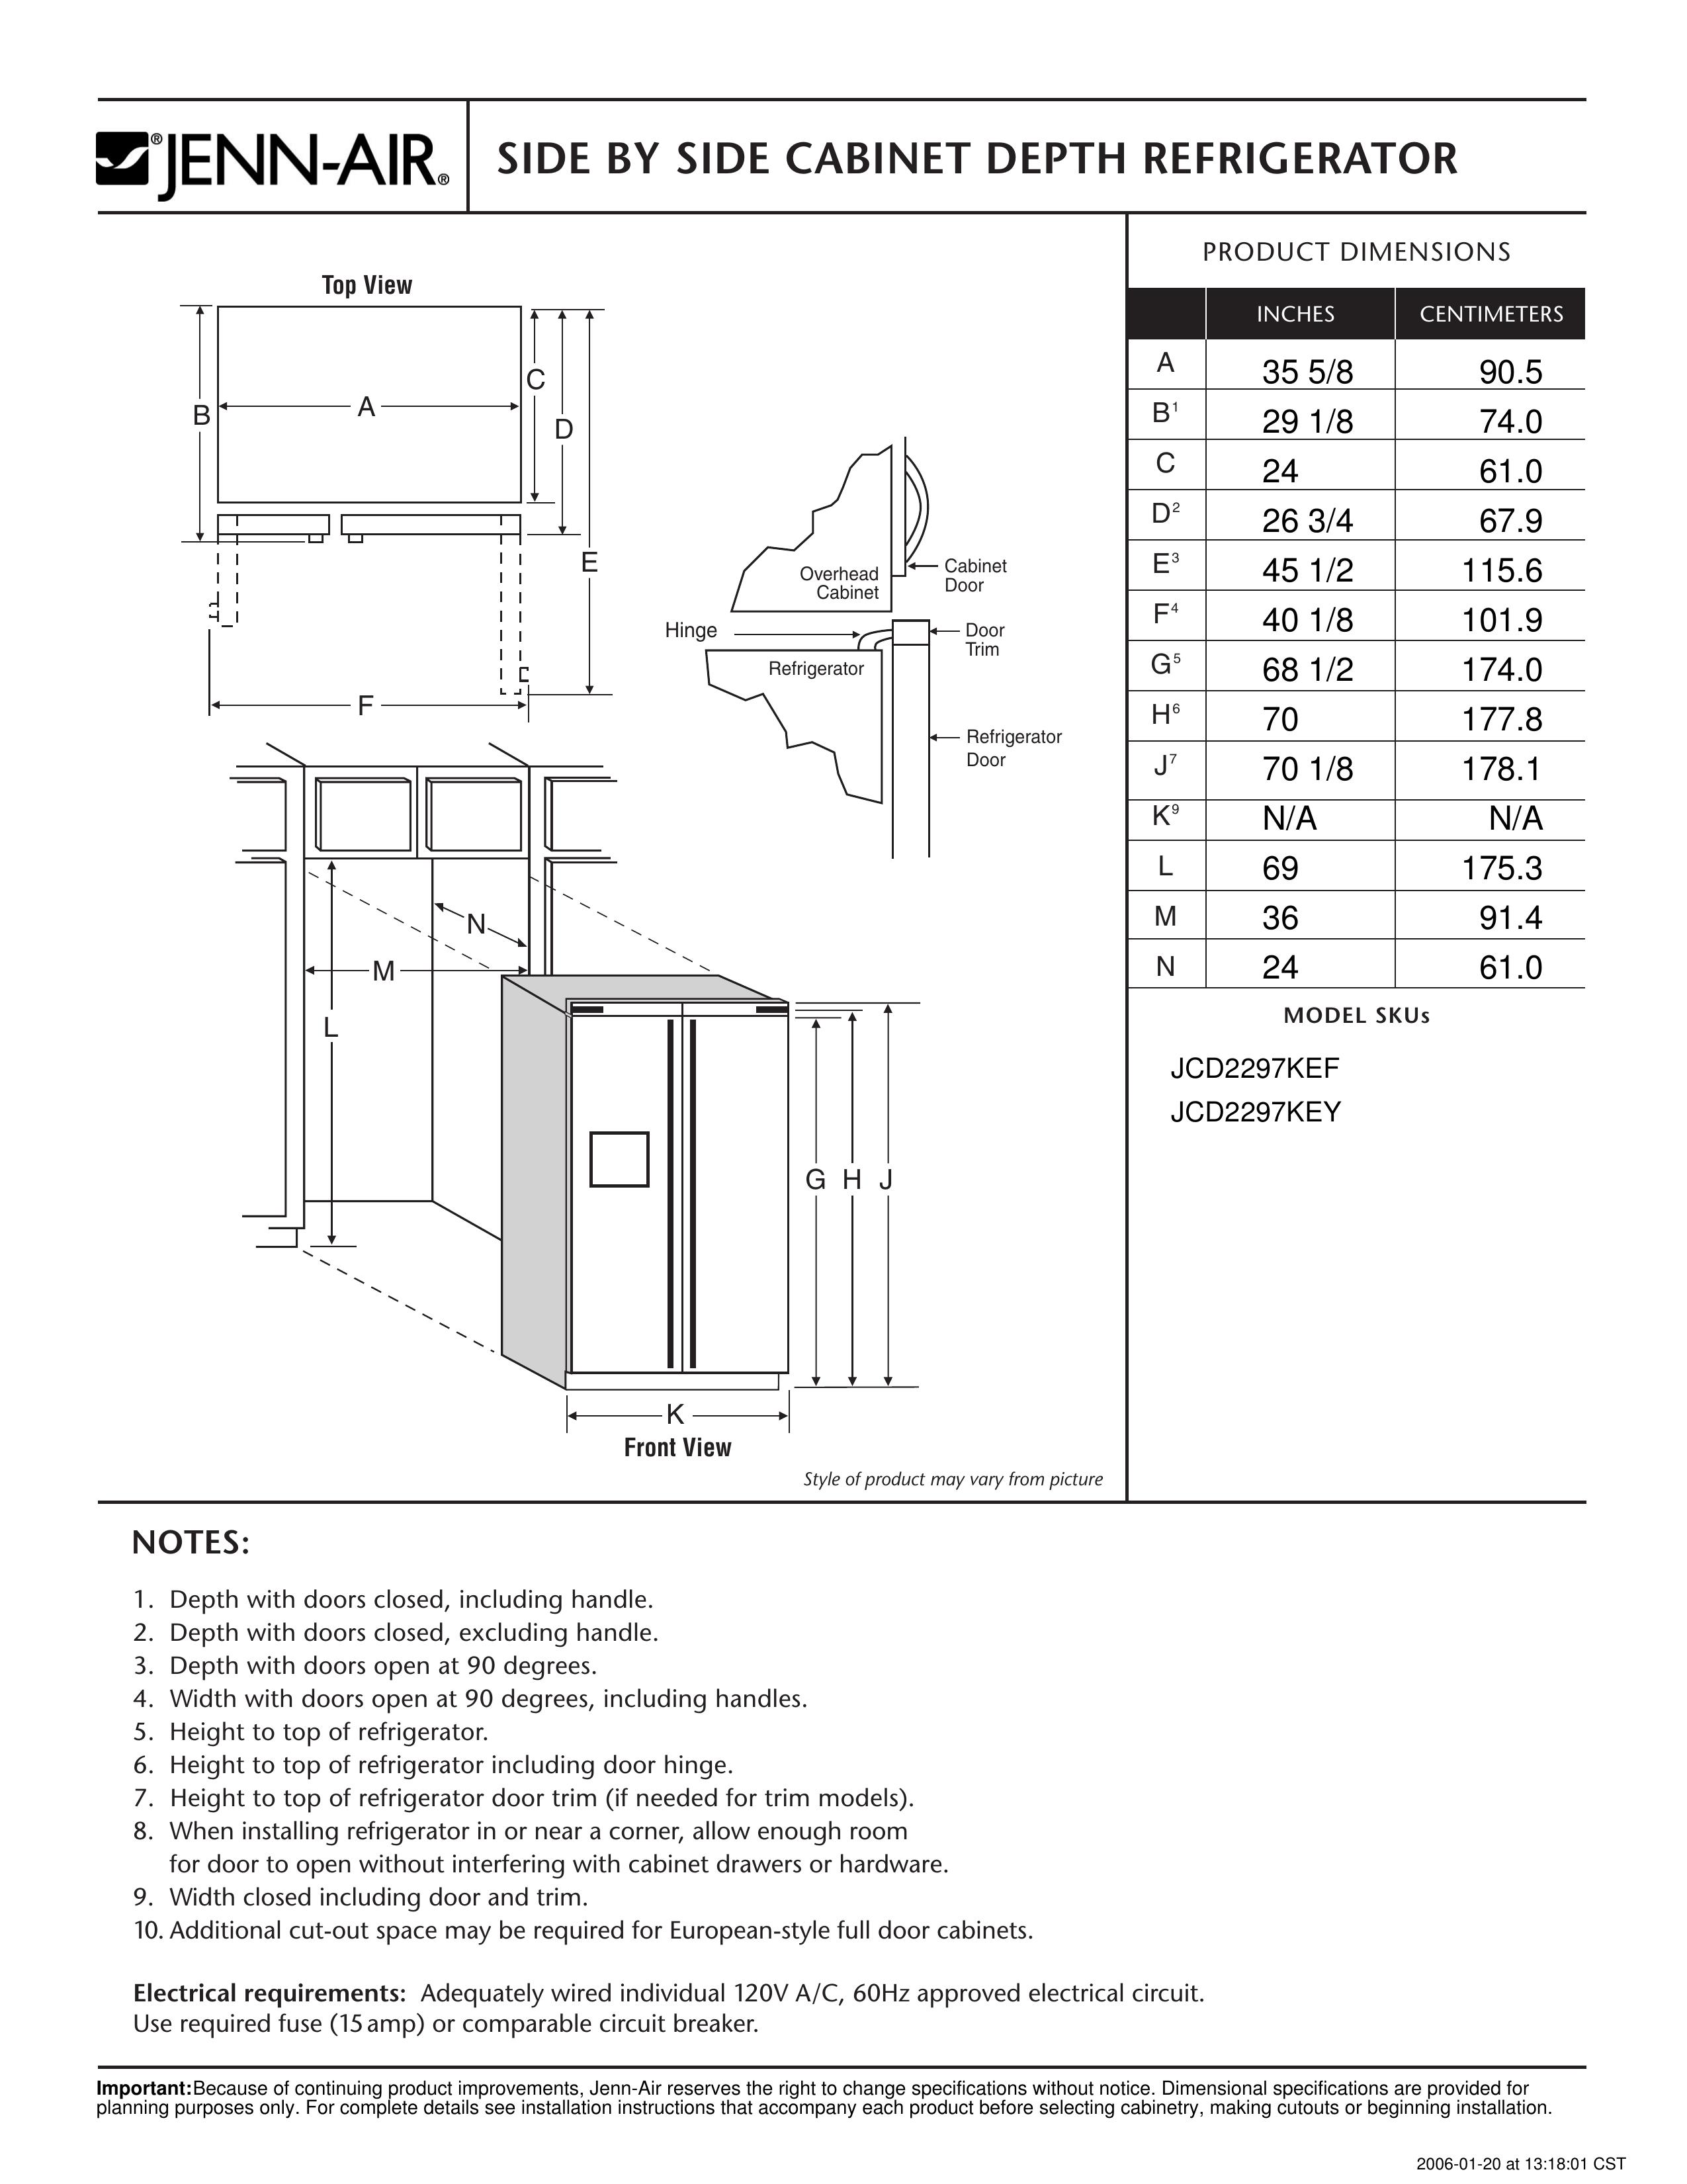 Jenn-Air JCD2297KEY Refrigerator User Manual